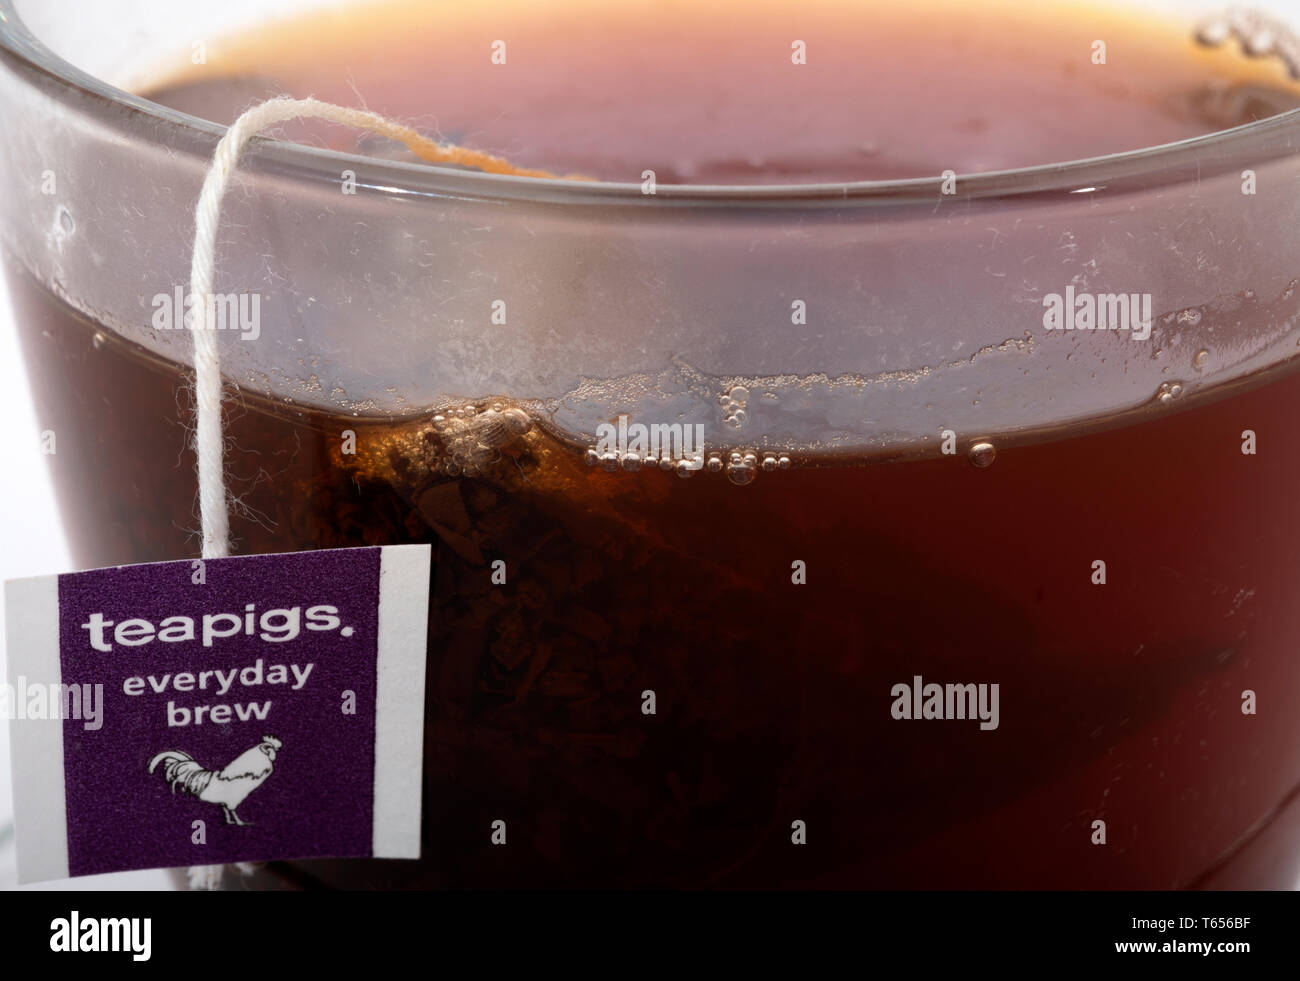 Teapigs tea bag Stock Photo